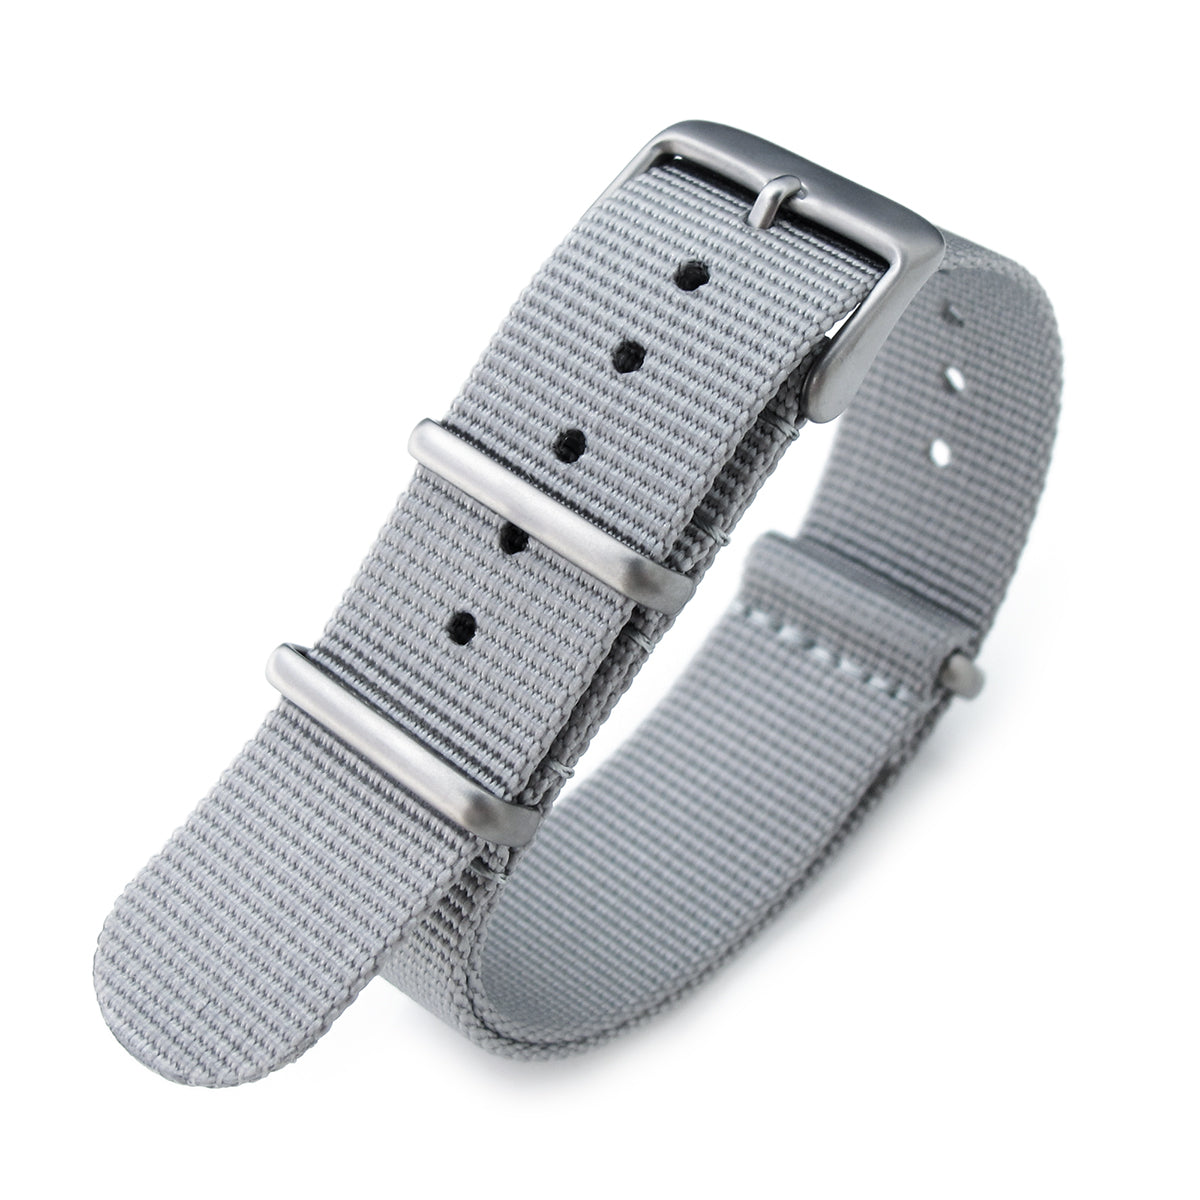 NATO 20mm G10 Military Watch Band Nylon Strap Military Grey Sandblasted 260mm Strapcode Watch Bands